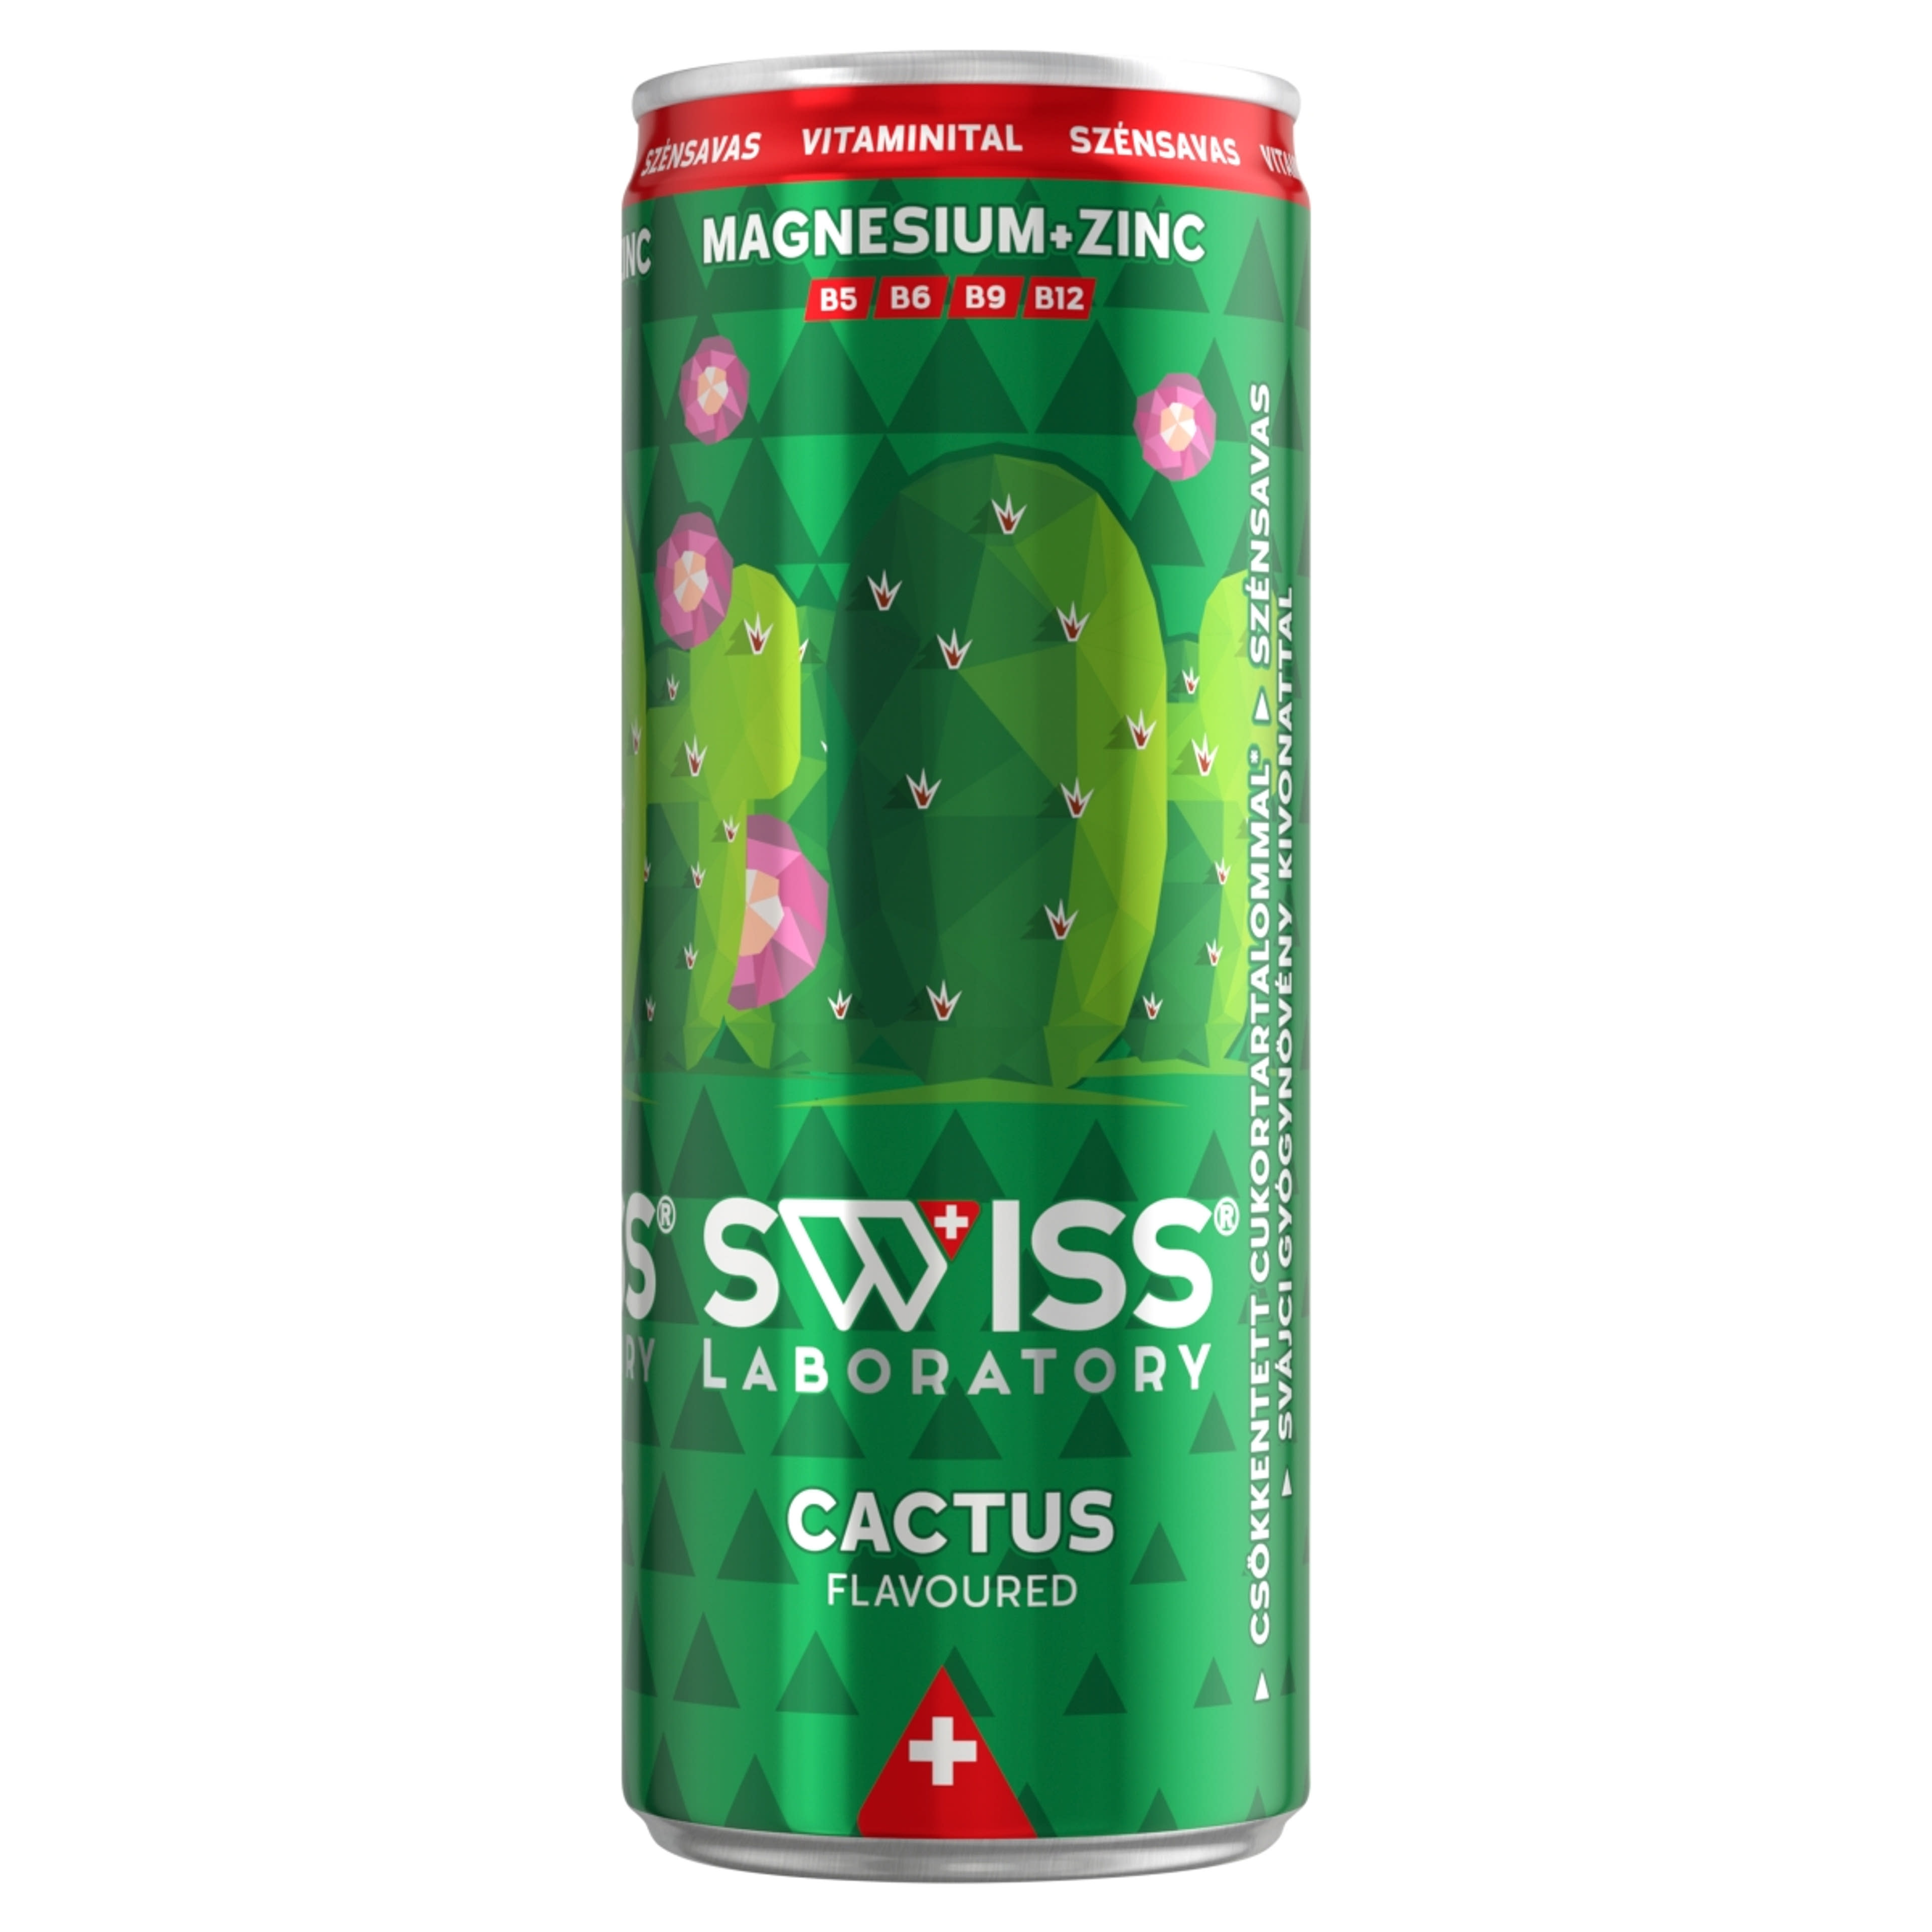 SWISS Laboratory Cactus flavoured Vitamin szénsavas üdítőital Kaktuszfügeízű - 250 ml